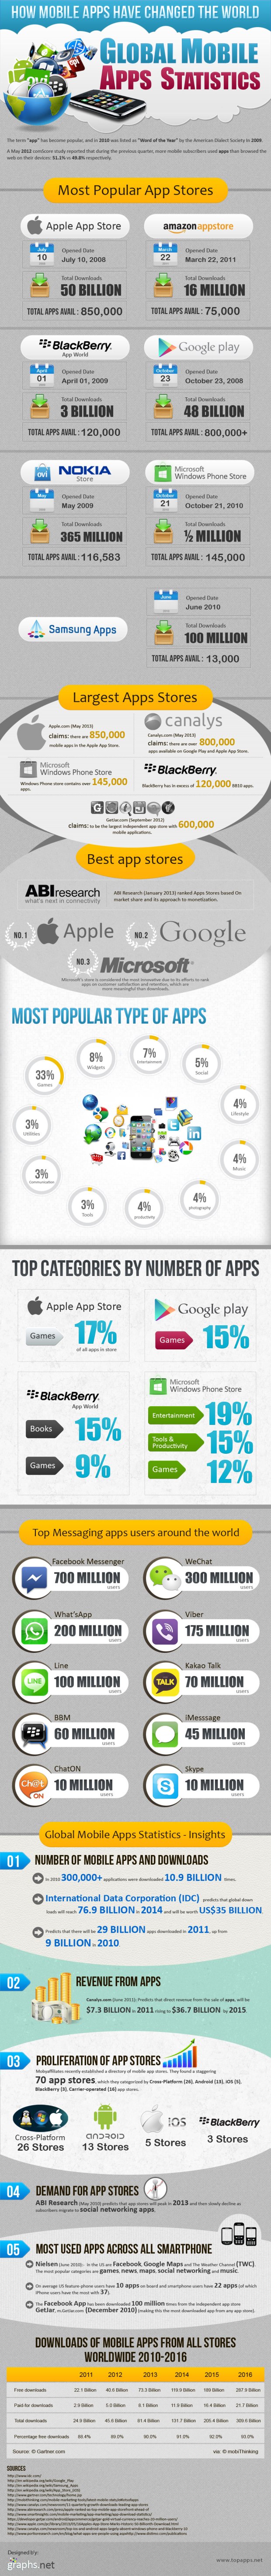 Mobile Apps Global Statistics 